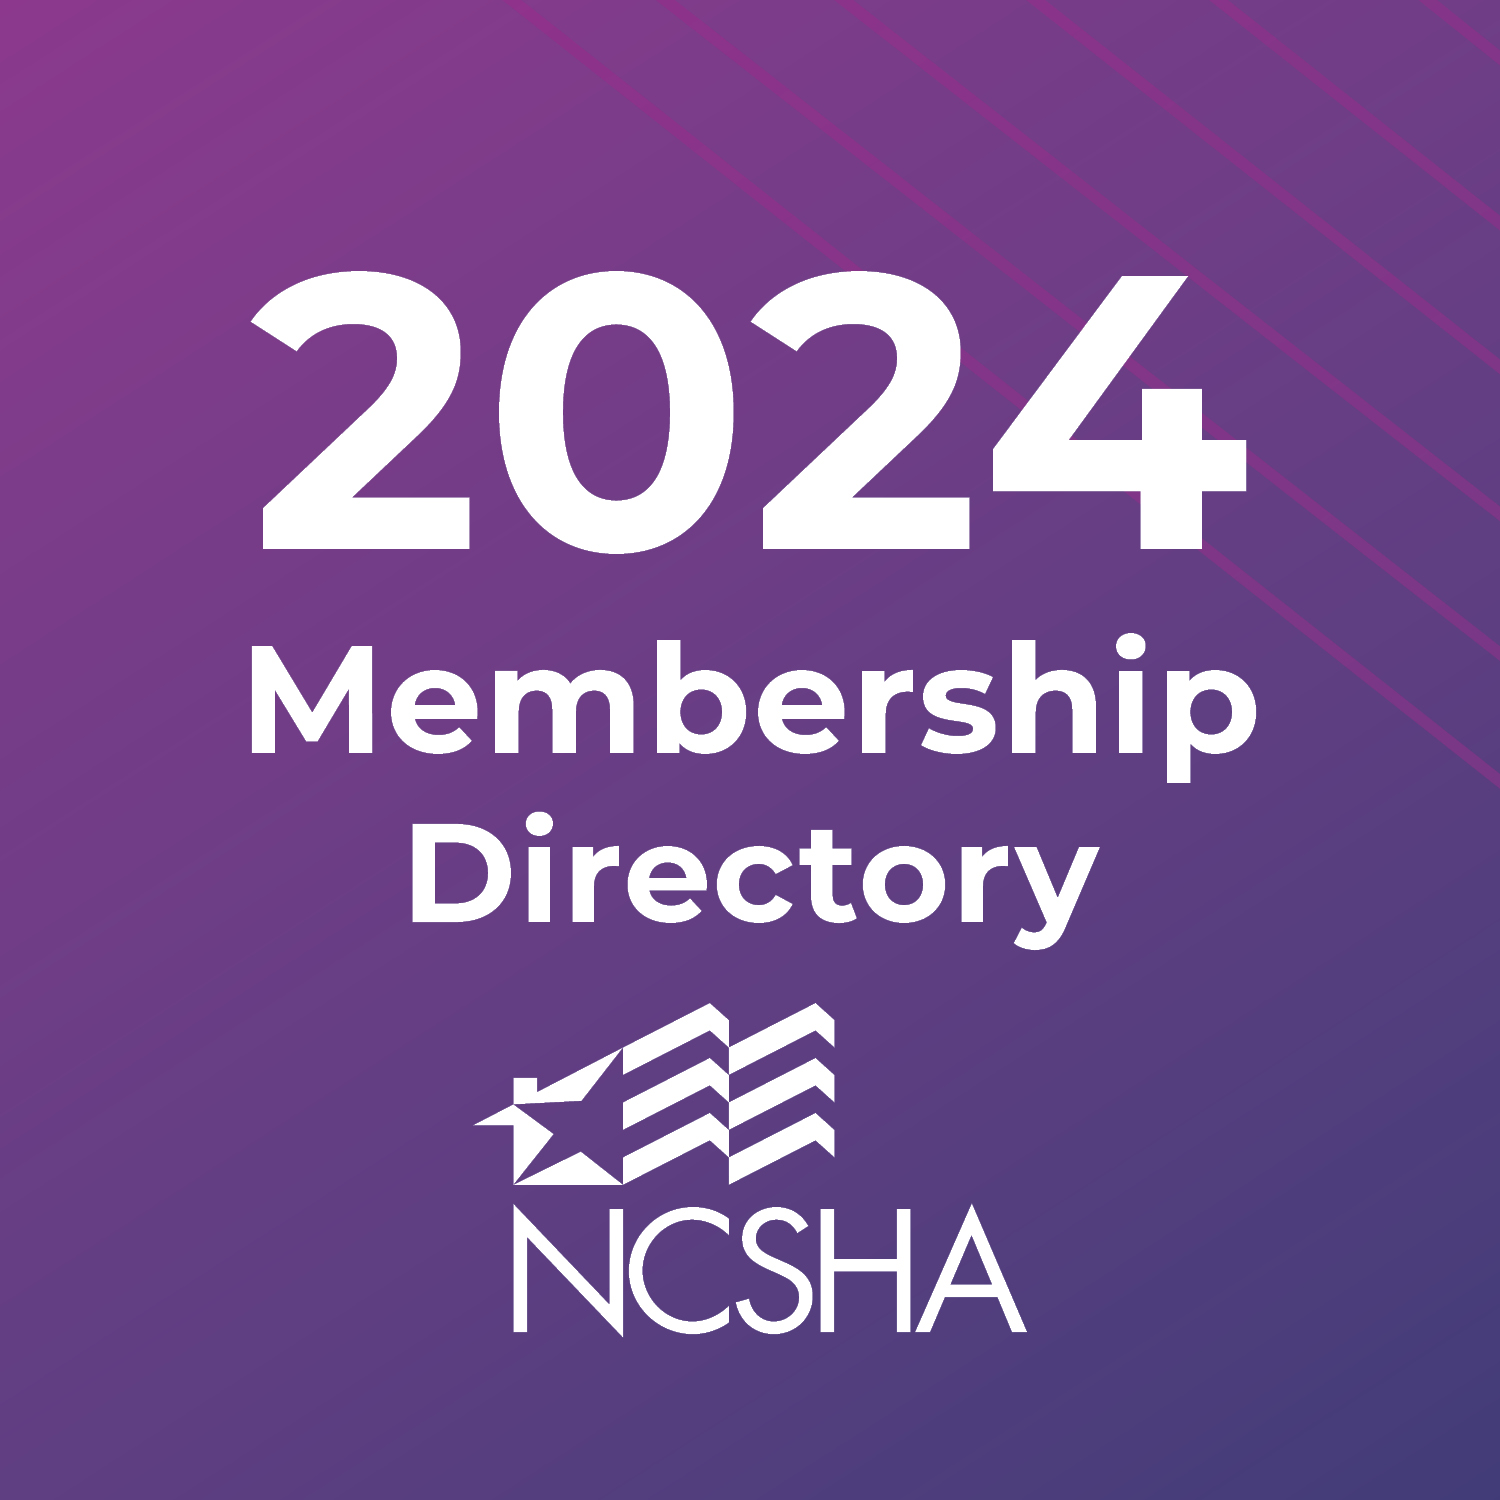   2024 Membership Directory - PDF Version